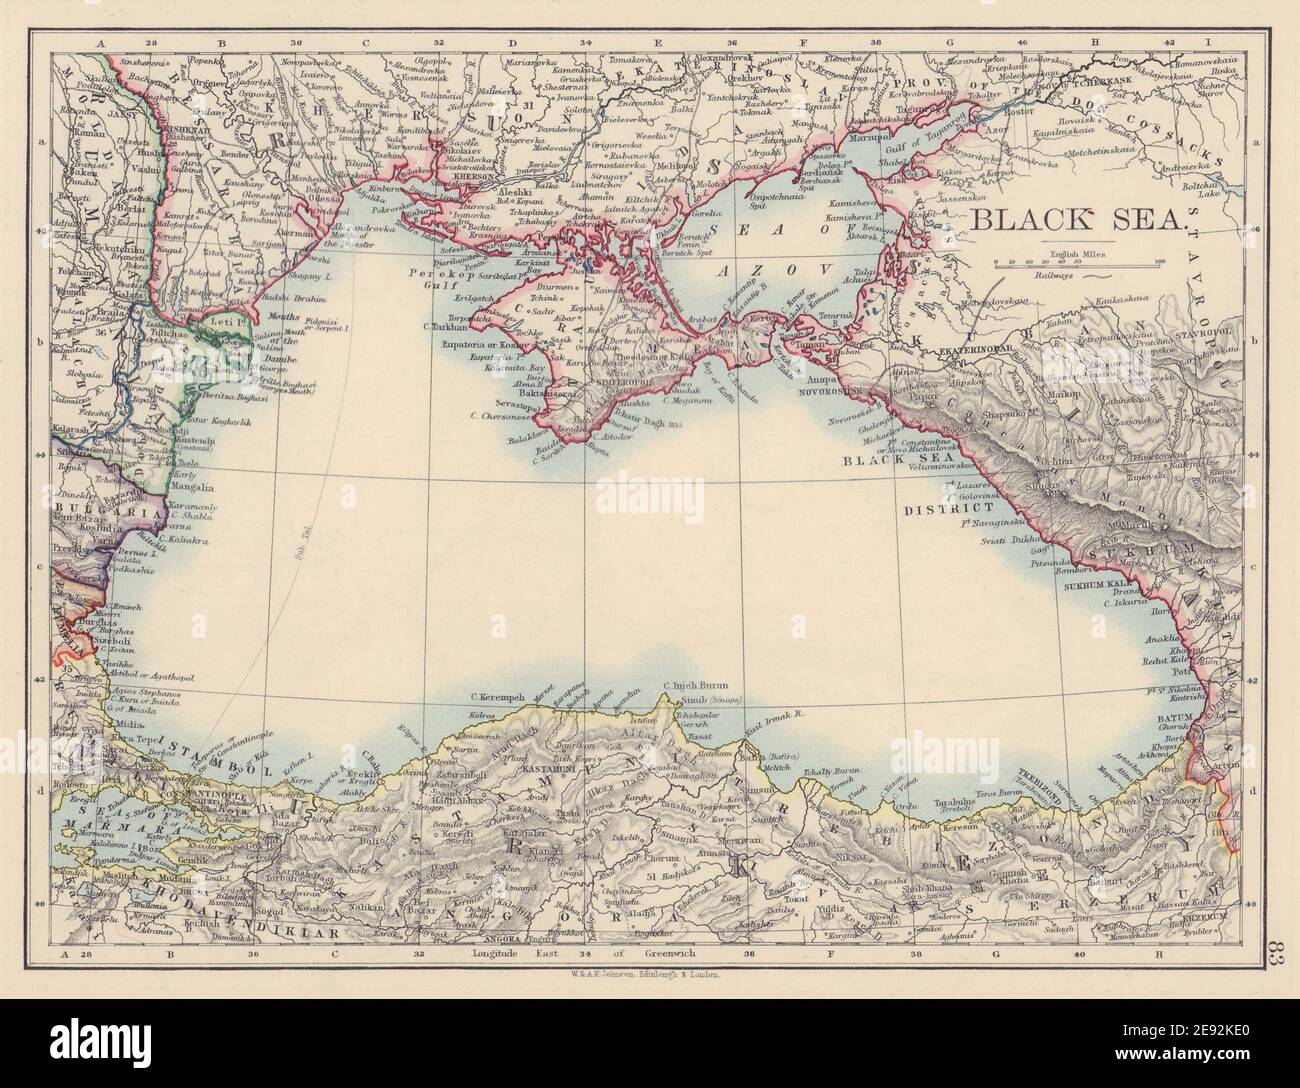 BLACK SEA. Russia Turkey Crimea Romania Bulgaria Kutais. JOHNSTON 1901 old map Stock Photo